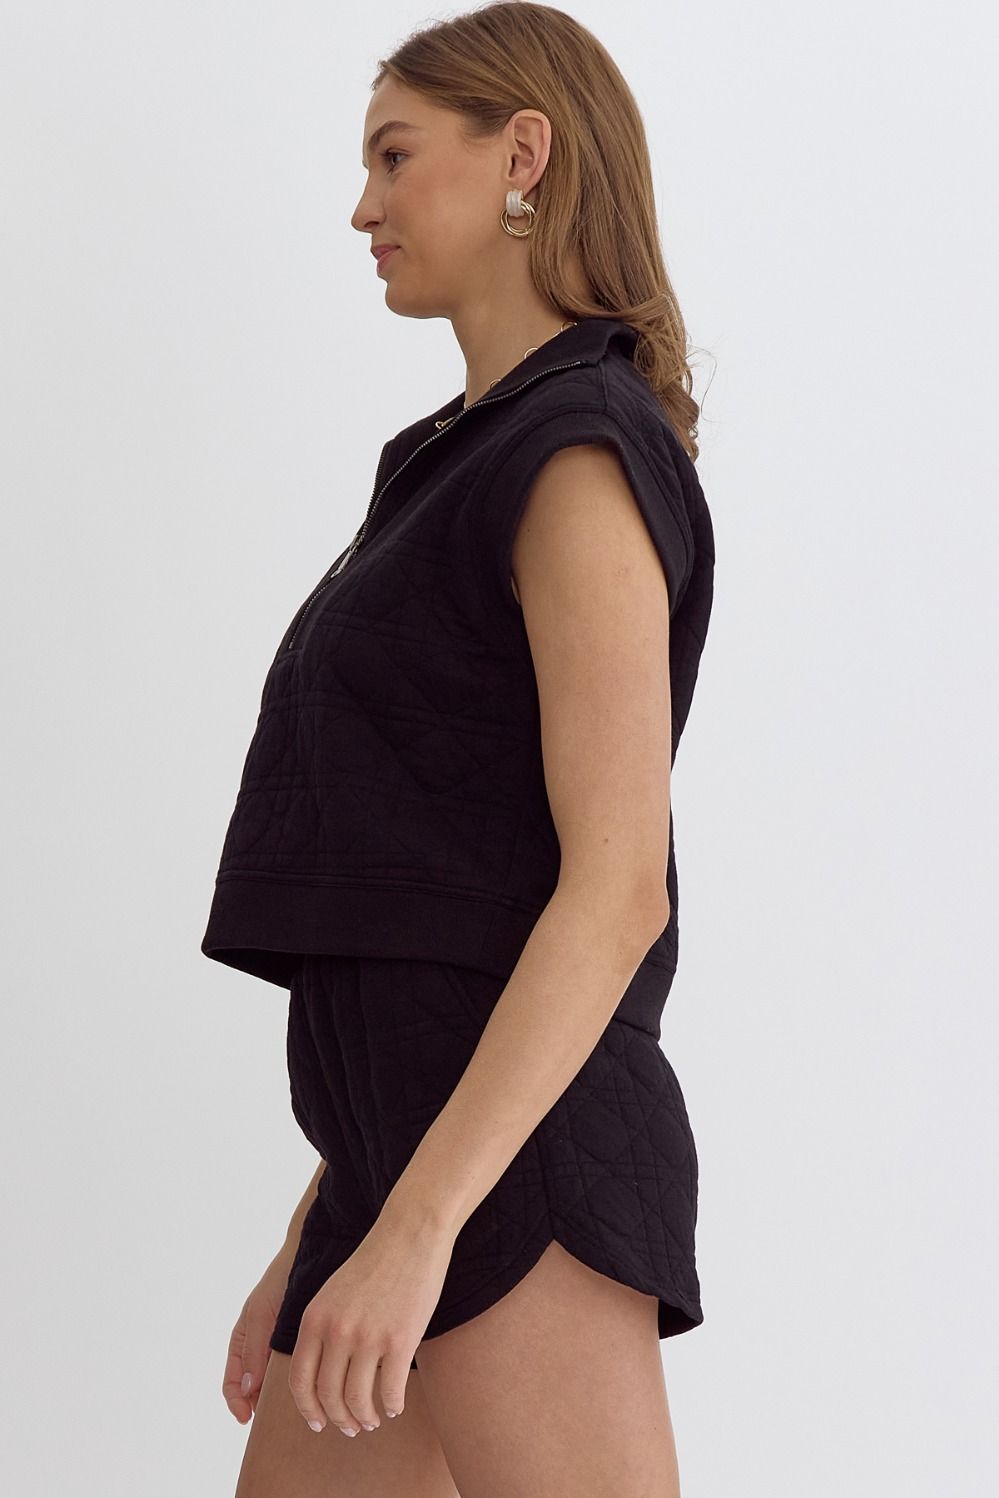 ENTRO INC Women's Top BLACK / S Short Sleeve Half Zip Quilted Top || David's Clothing T22853